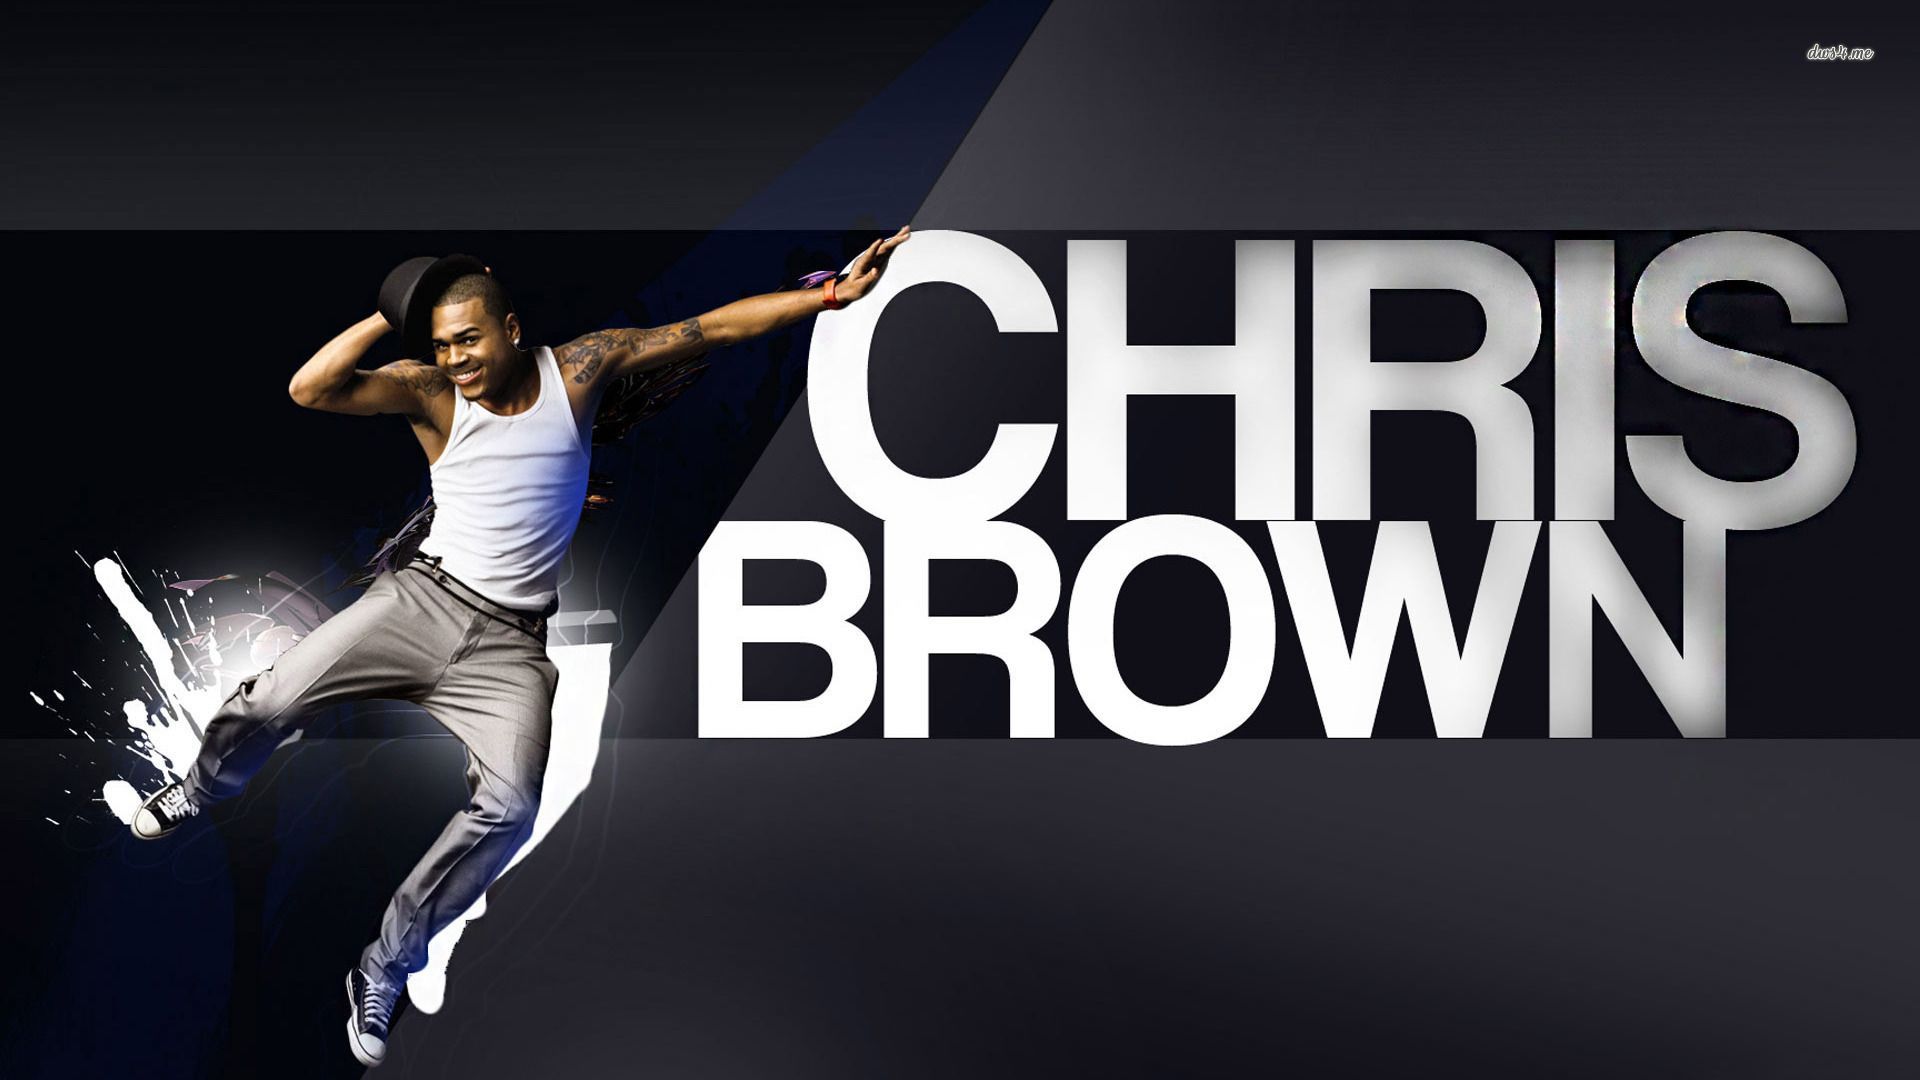 Chris Brown wallpaper - Music wallpapers - #7176